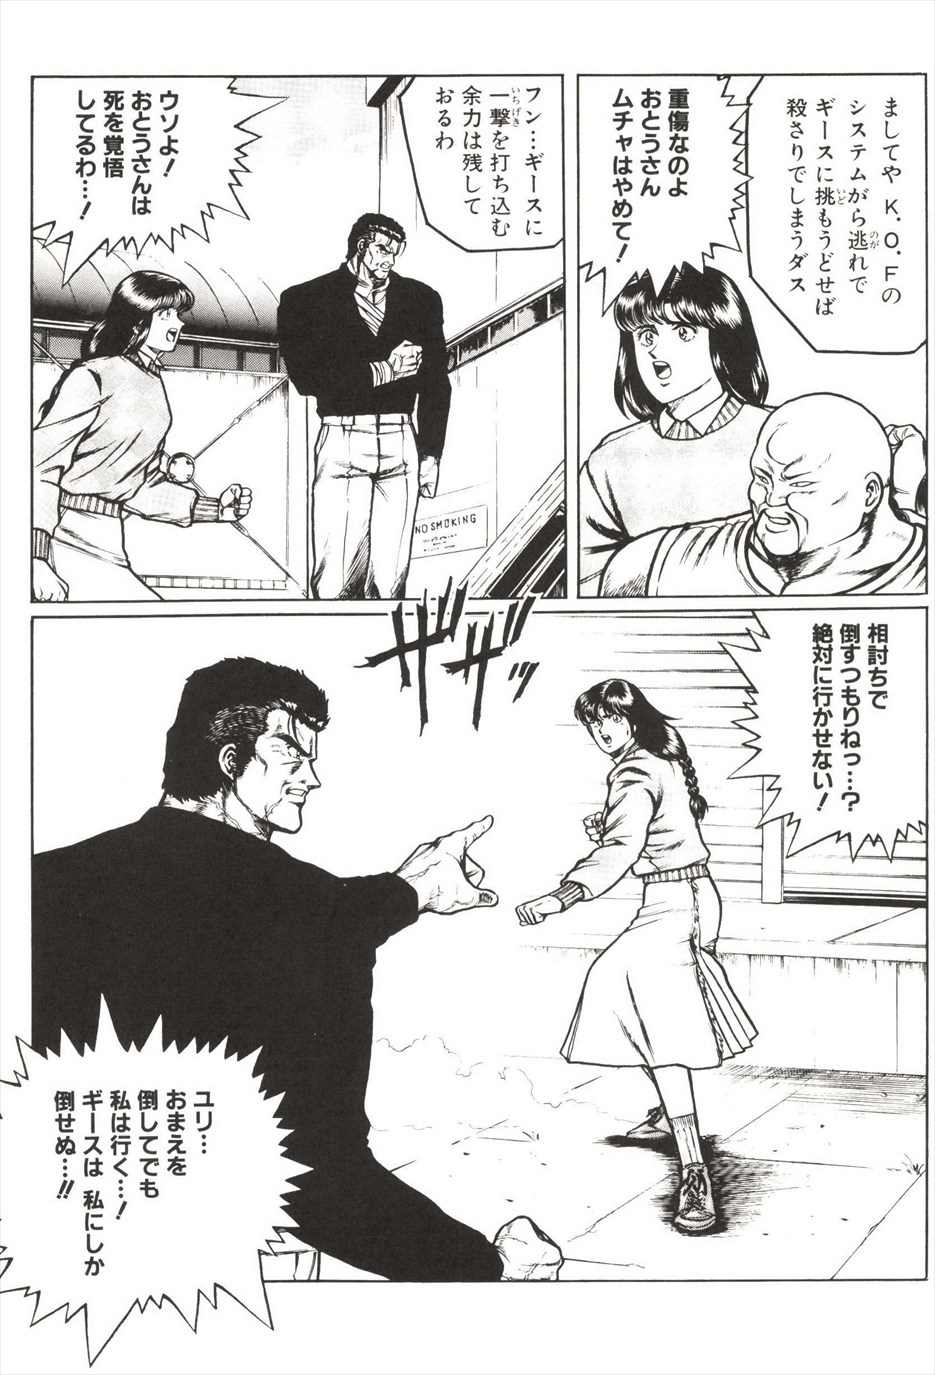 [amazishi etsuya] ART OF FIGHTING ryuuko no ken 2-2 30